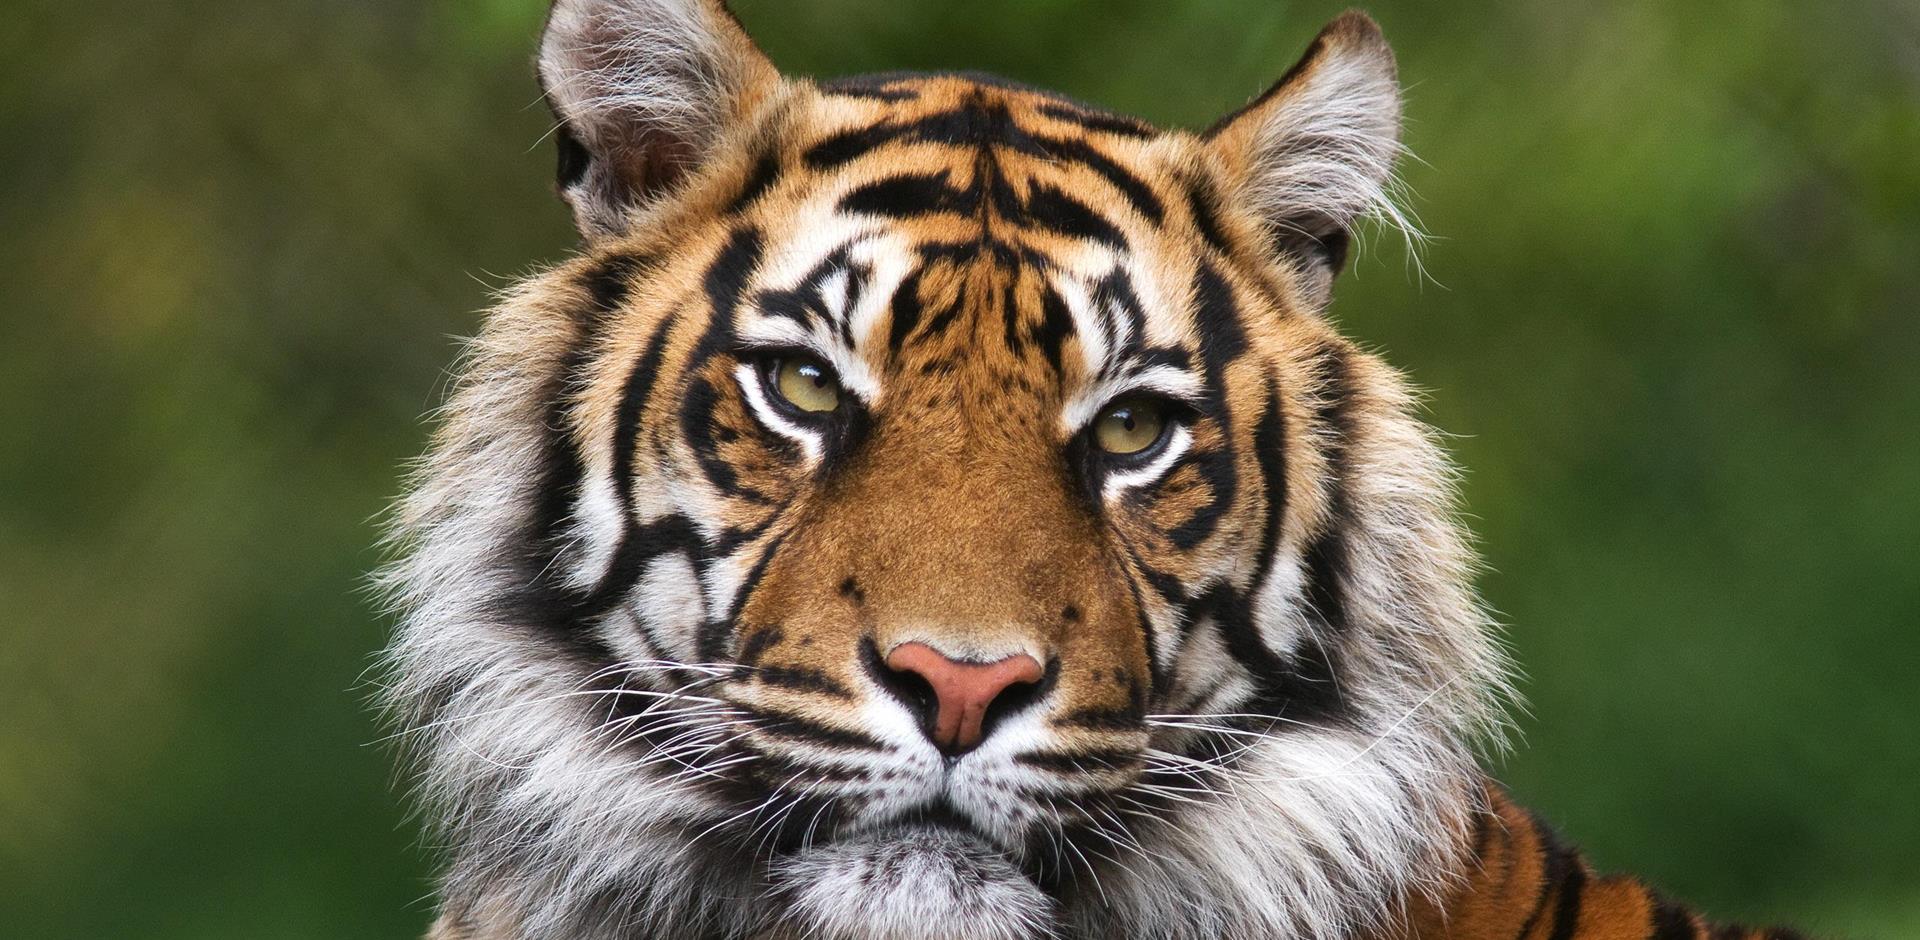 Tigers, India